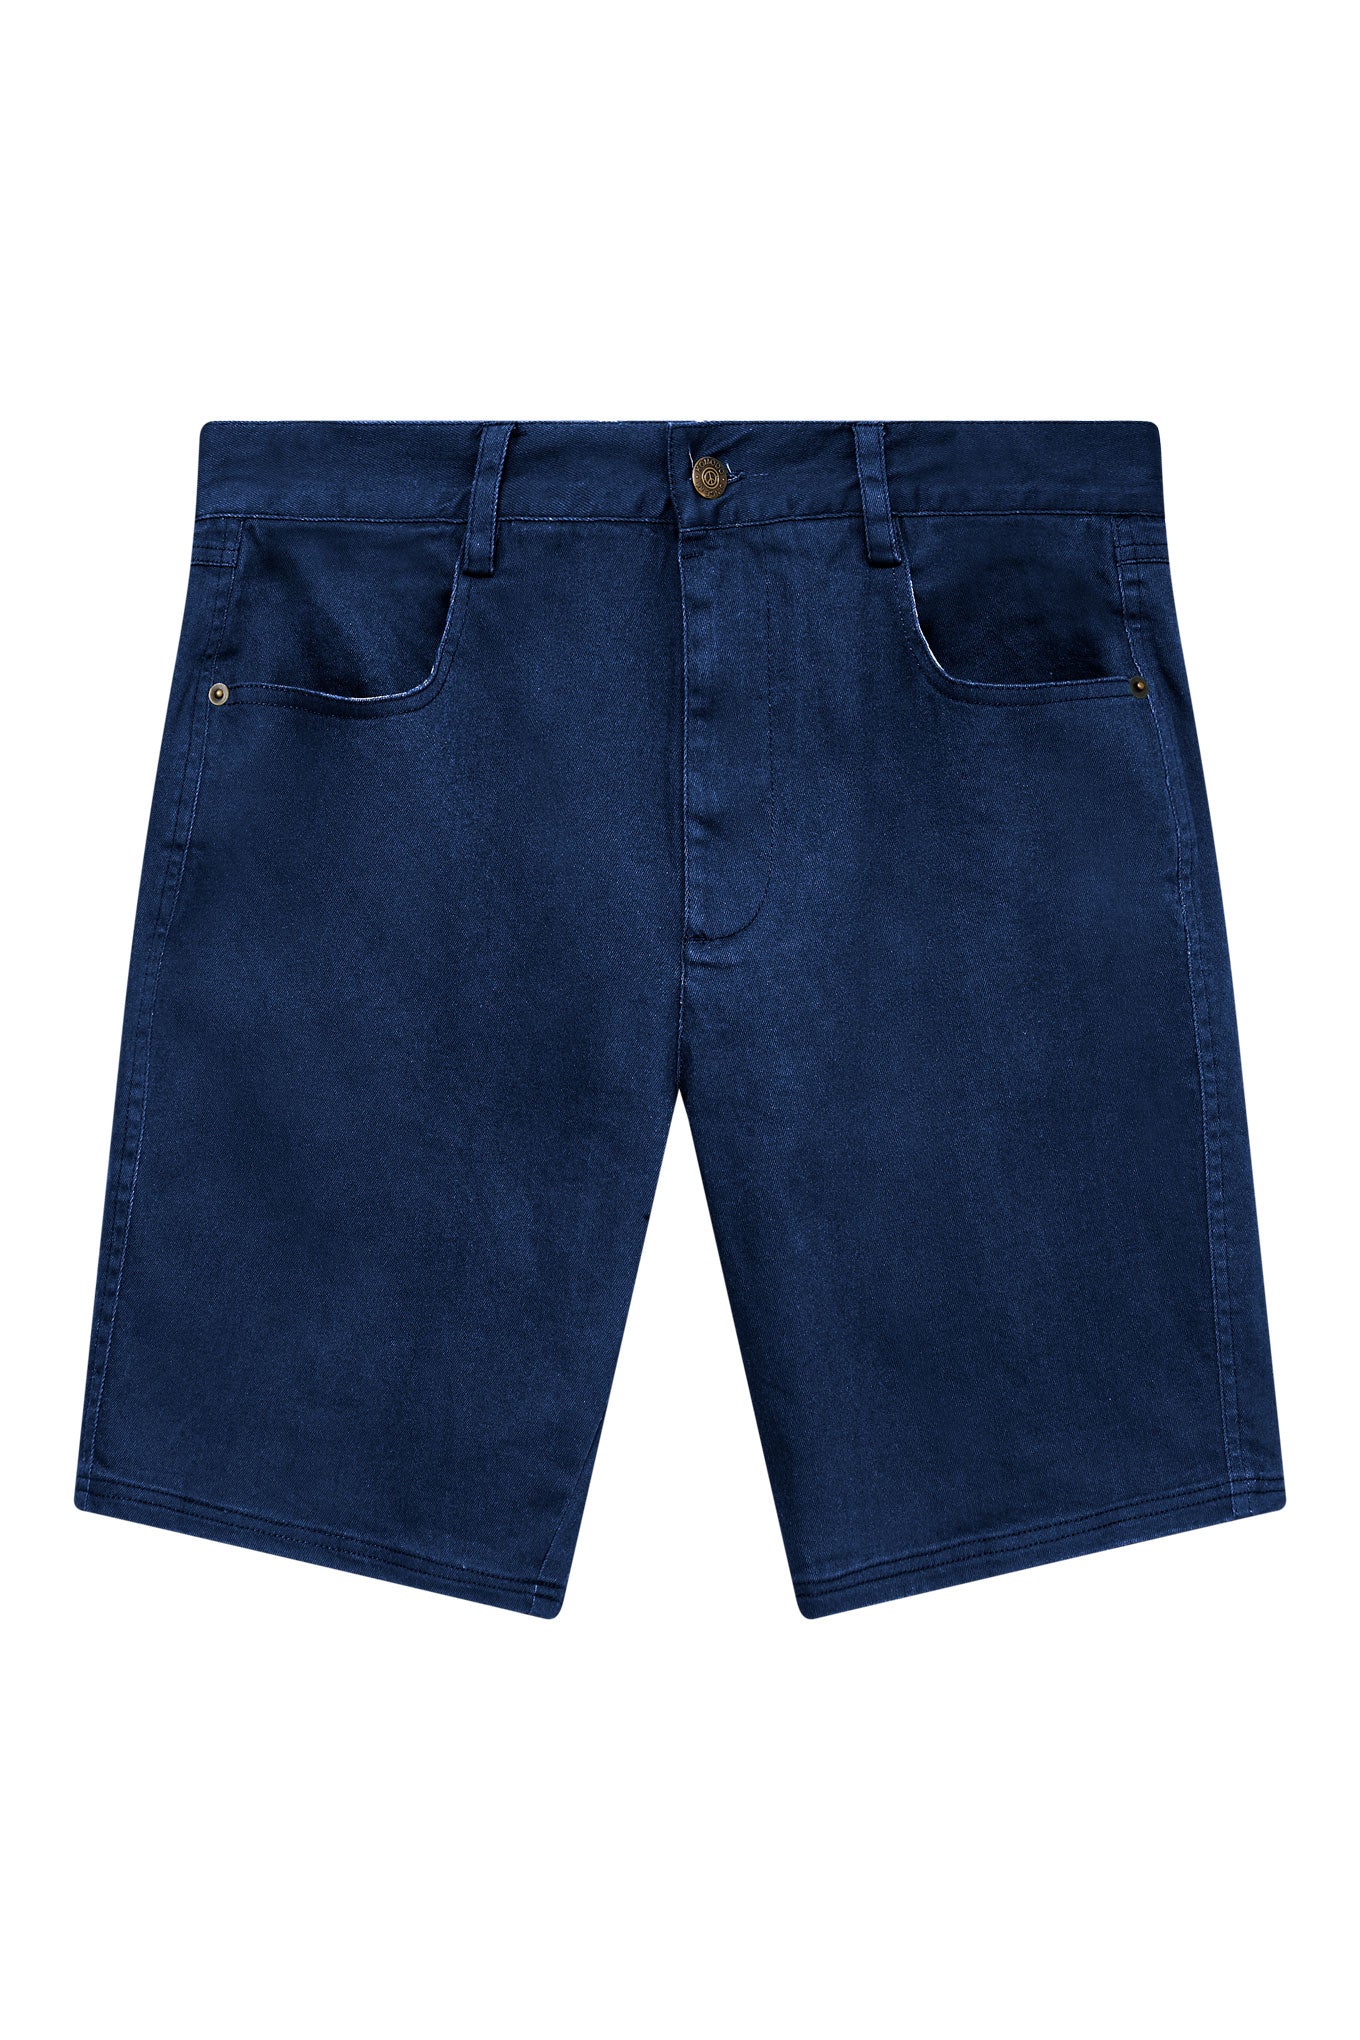 Komodo Men's Blue Lyric - Organic Cotton Shorts Navy